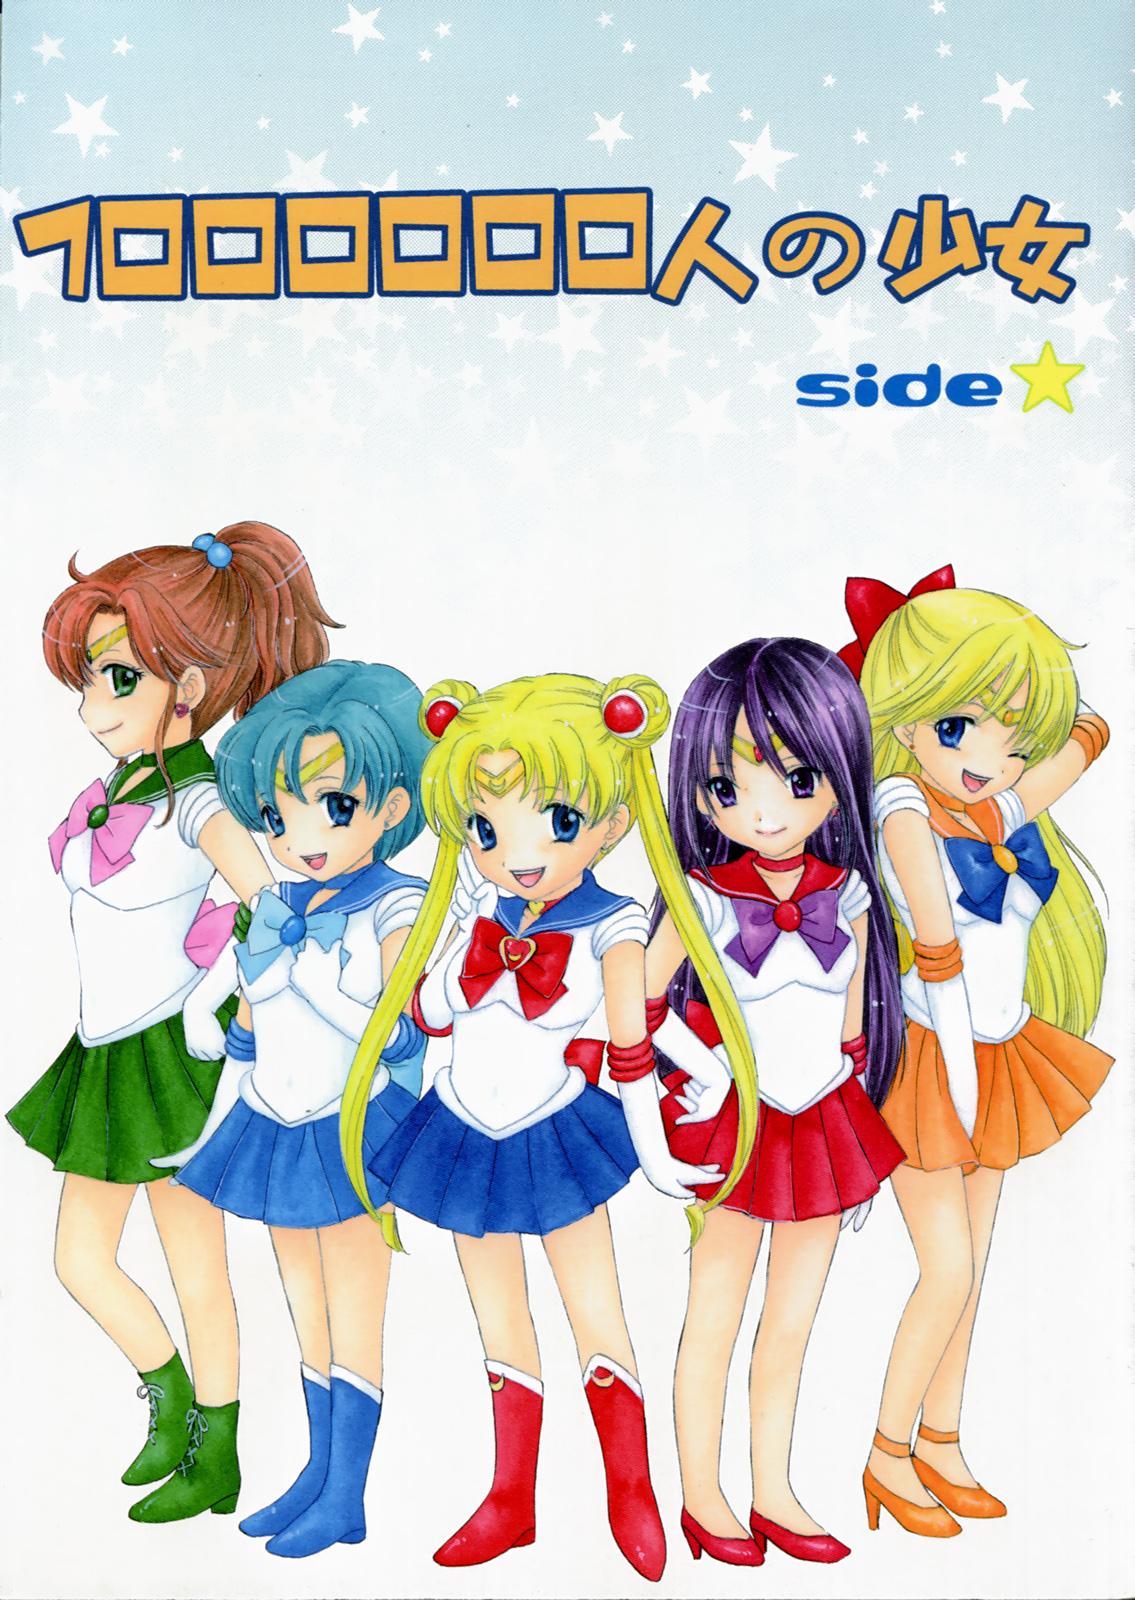 Threeway 1000000-nin no Shoujo side star - Sailor moon Gay Anal - Picture 1